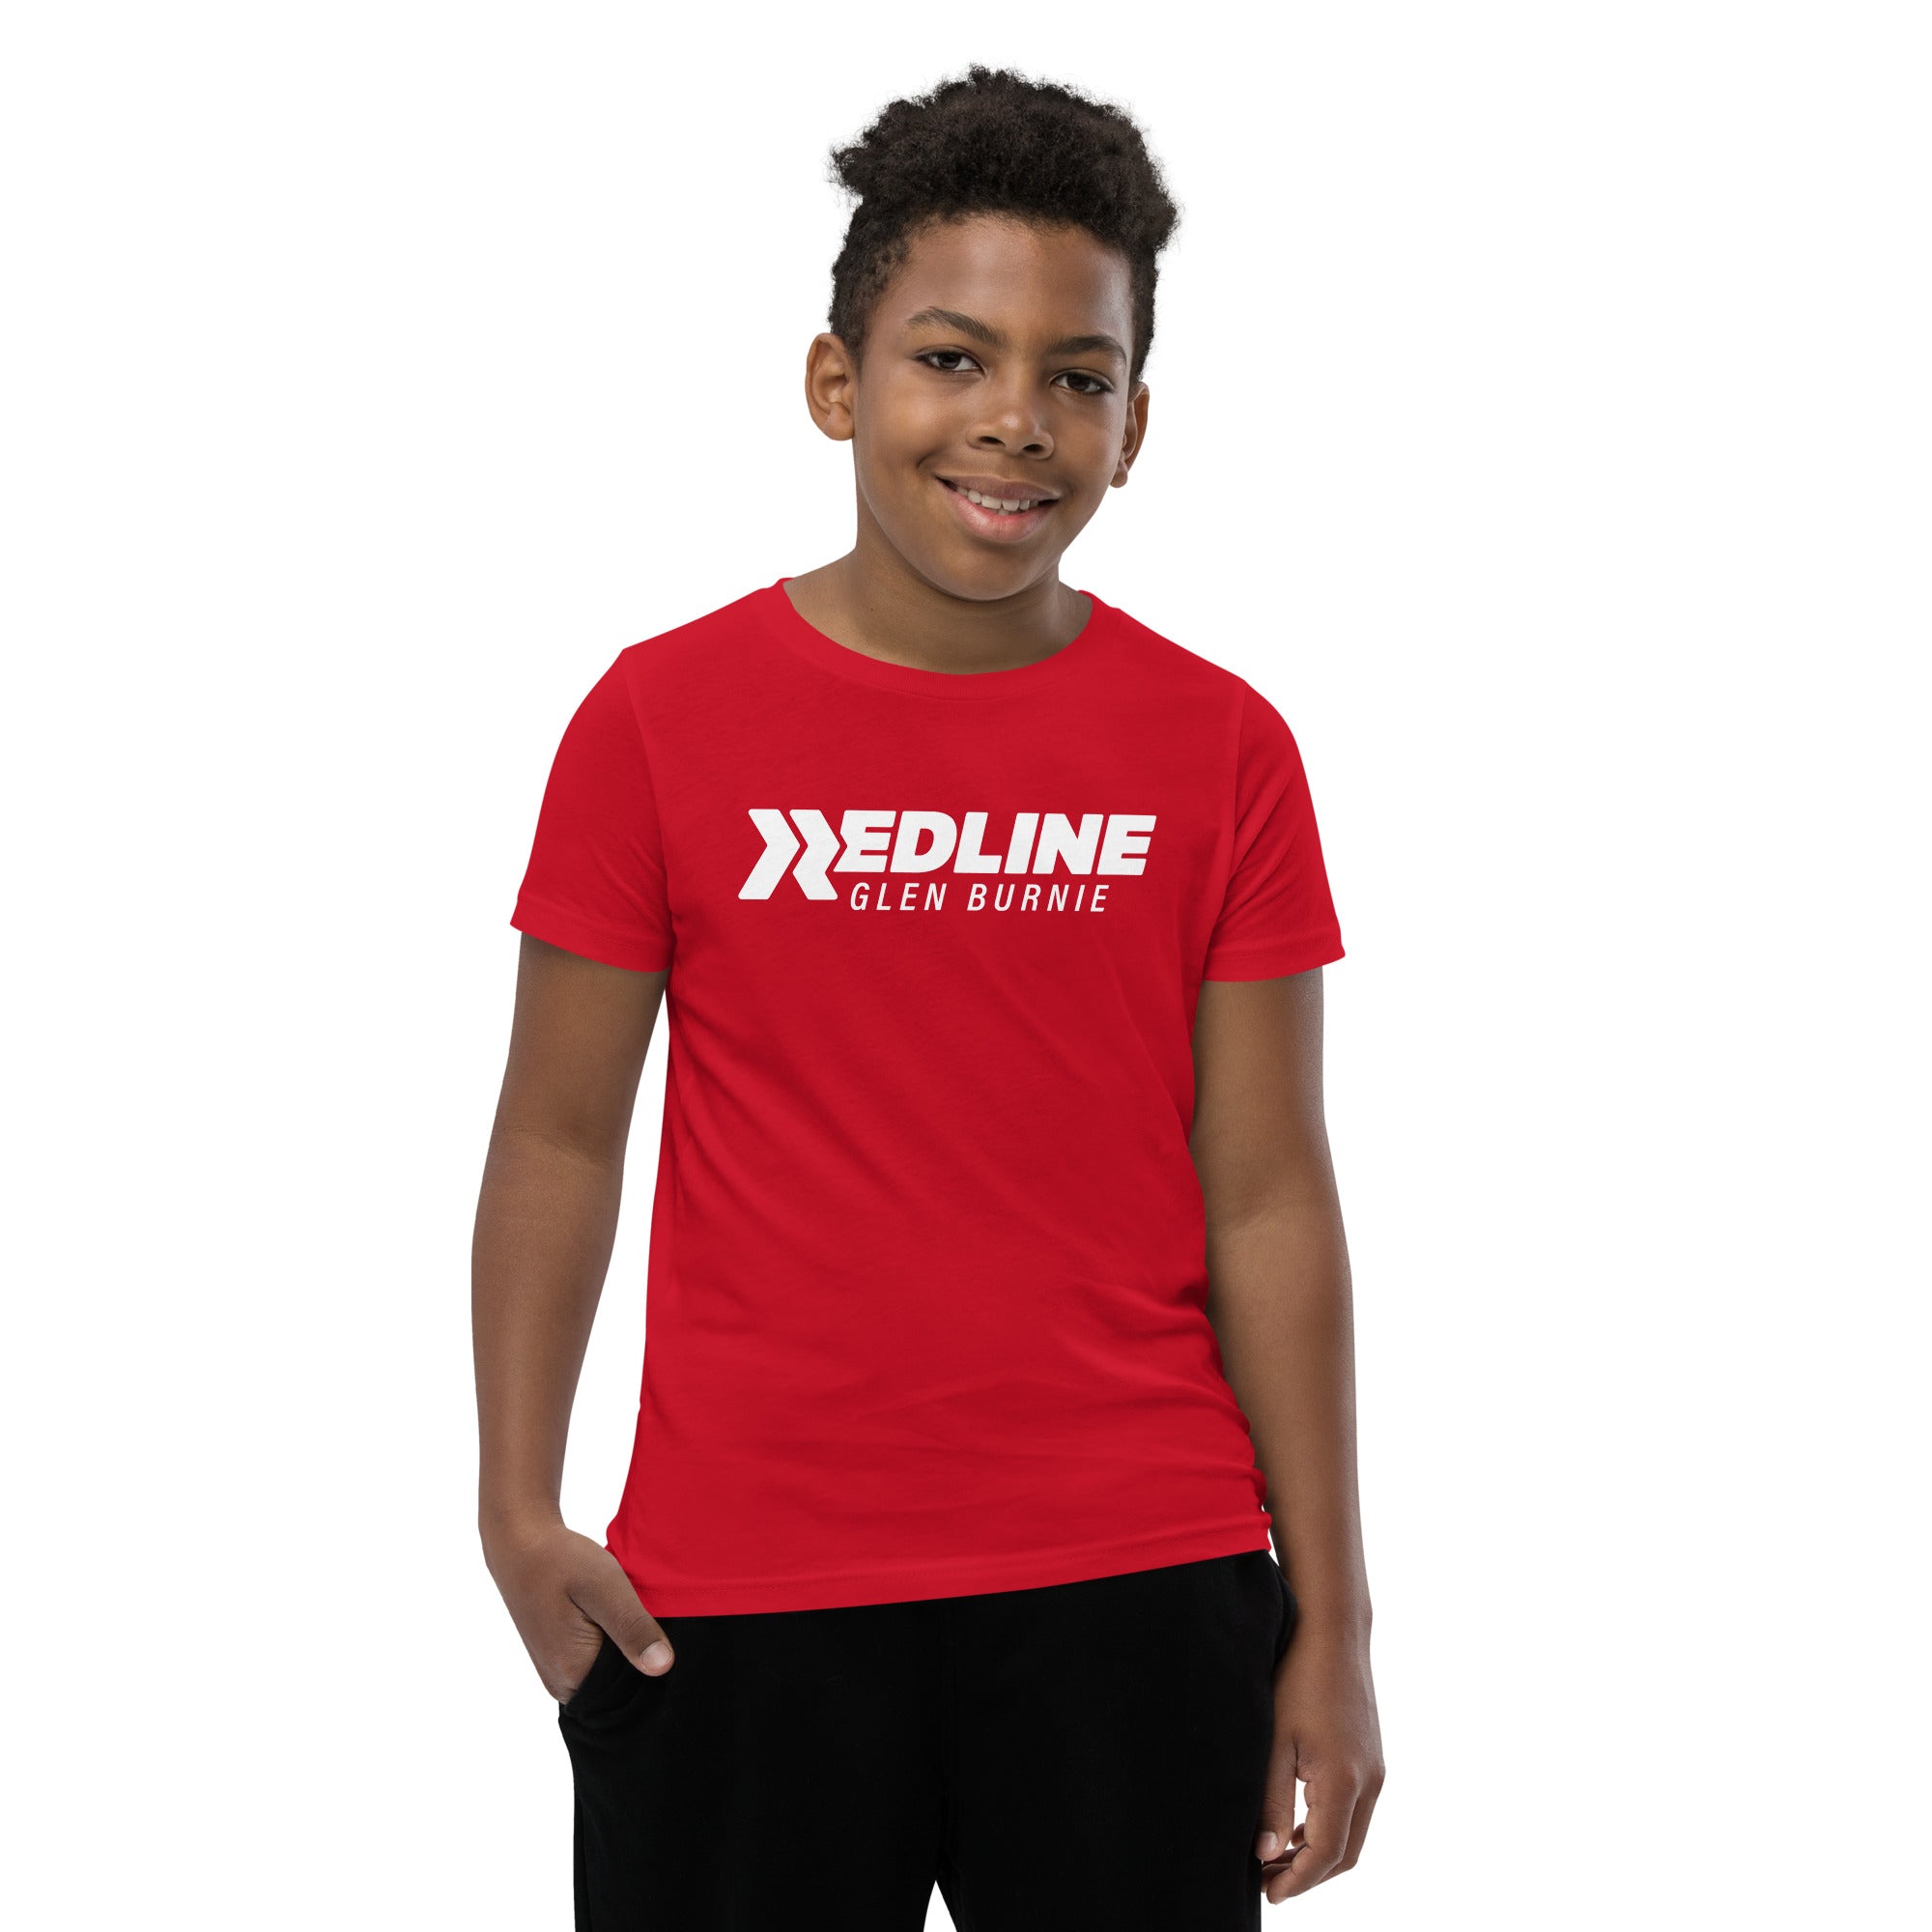 Glen Burnie Logo W - Red Youth Short Sleeve T-Shirt